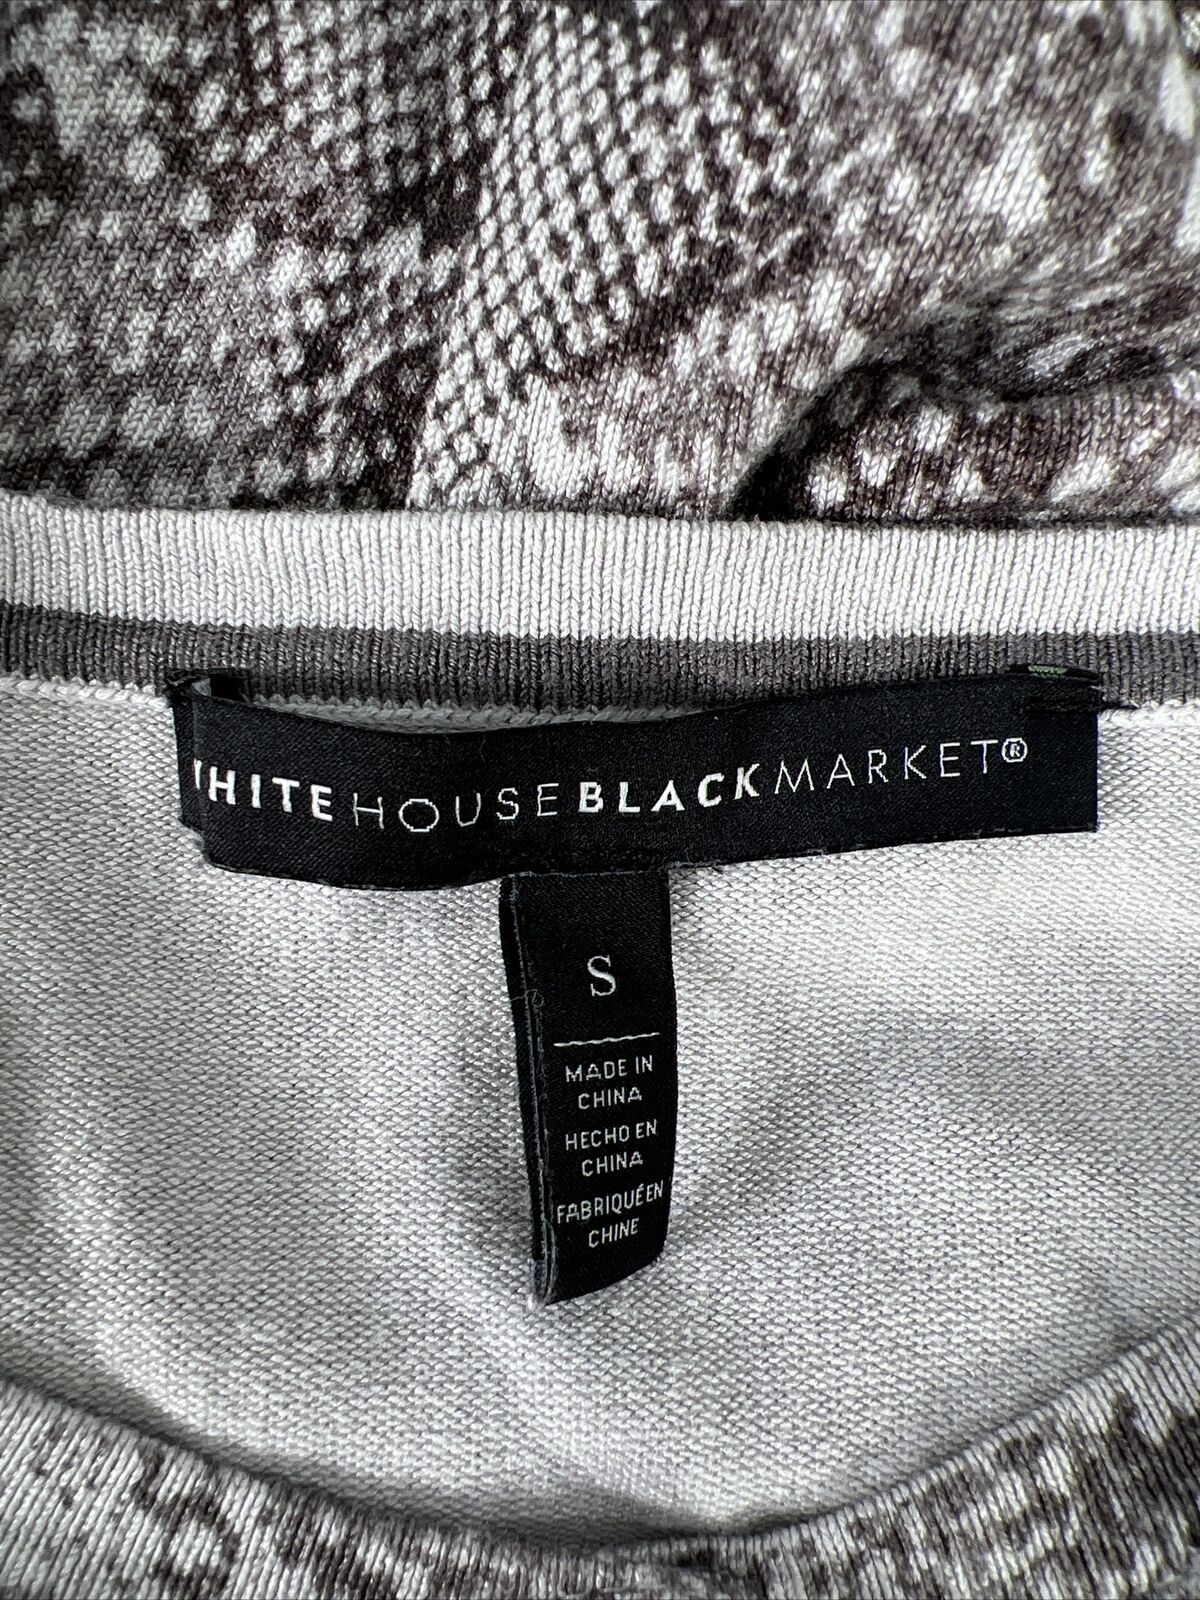 White House Black Market Women's Gray Snap Button Shrug Cardigan - S